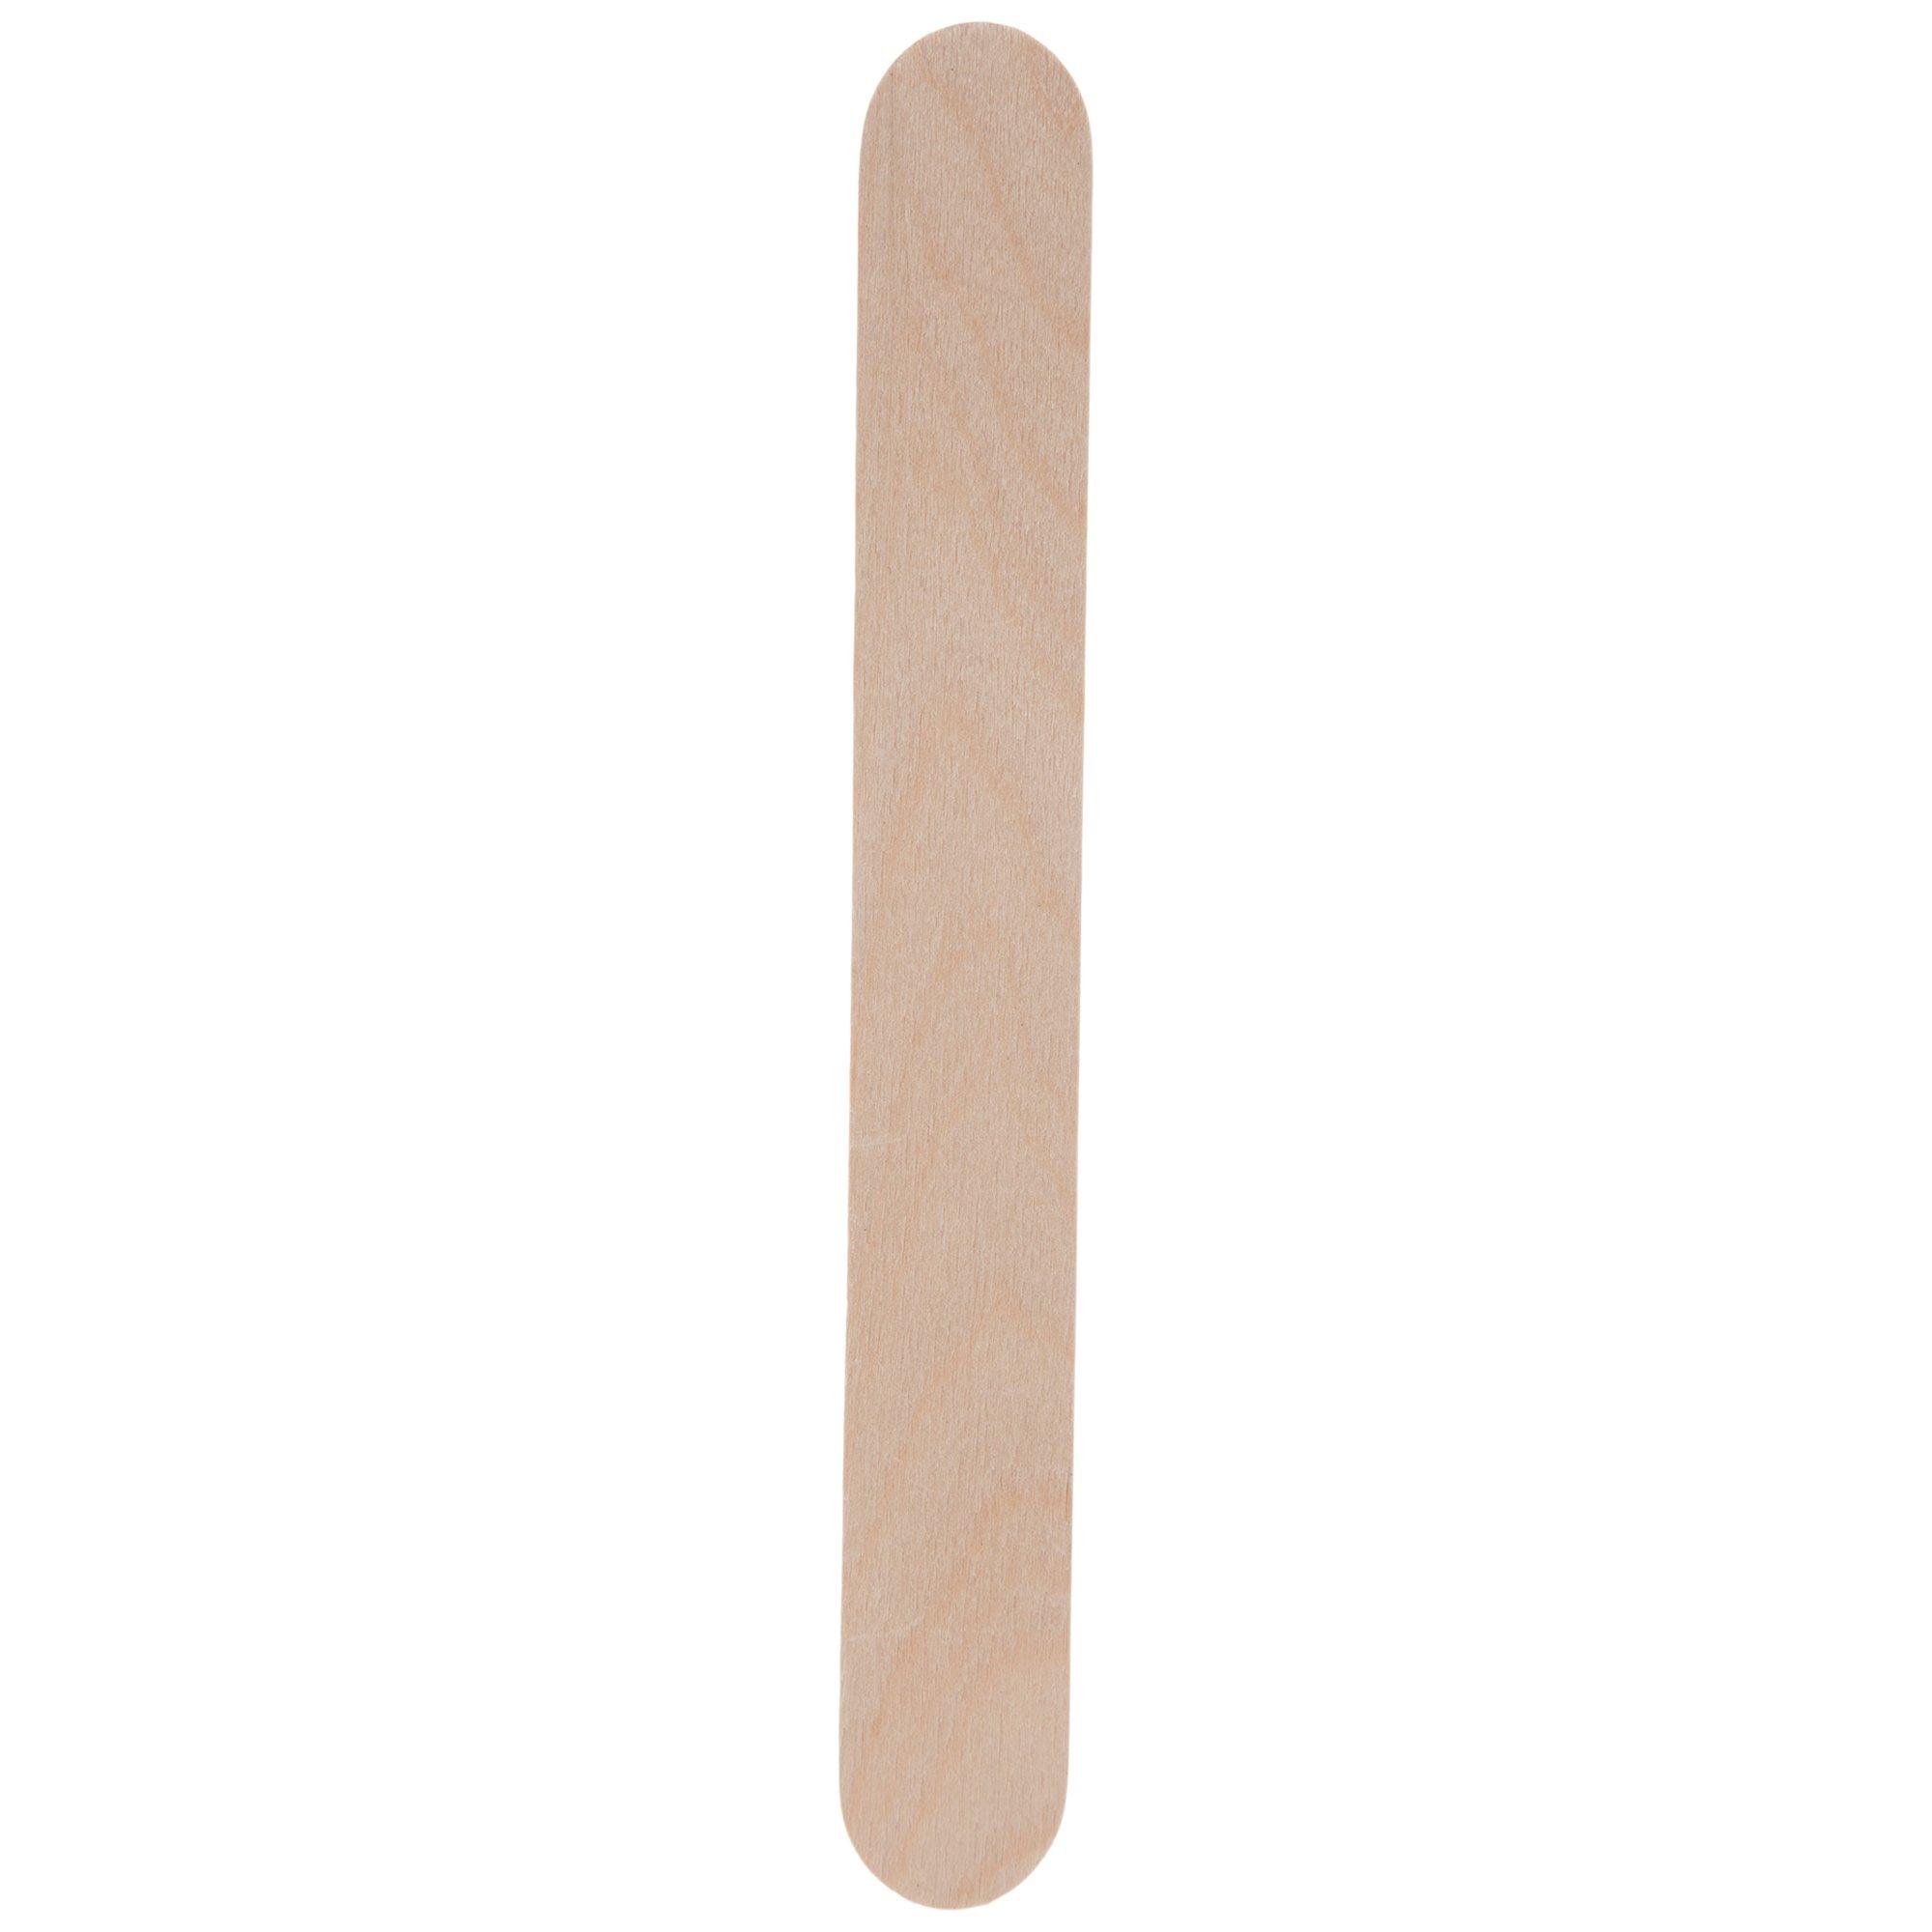 25 pcs EXTRA JUMBO Wooden Popsicle Sticks 1 x 8 Wood Art Craft Stick  School C86